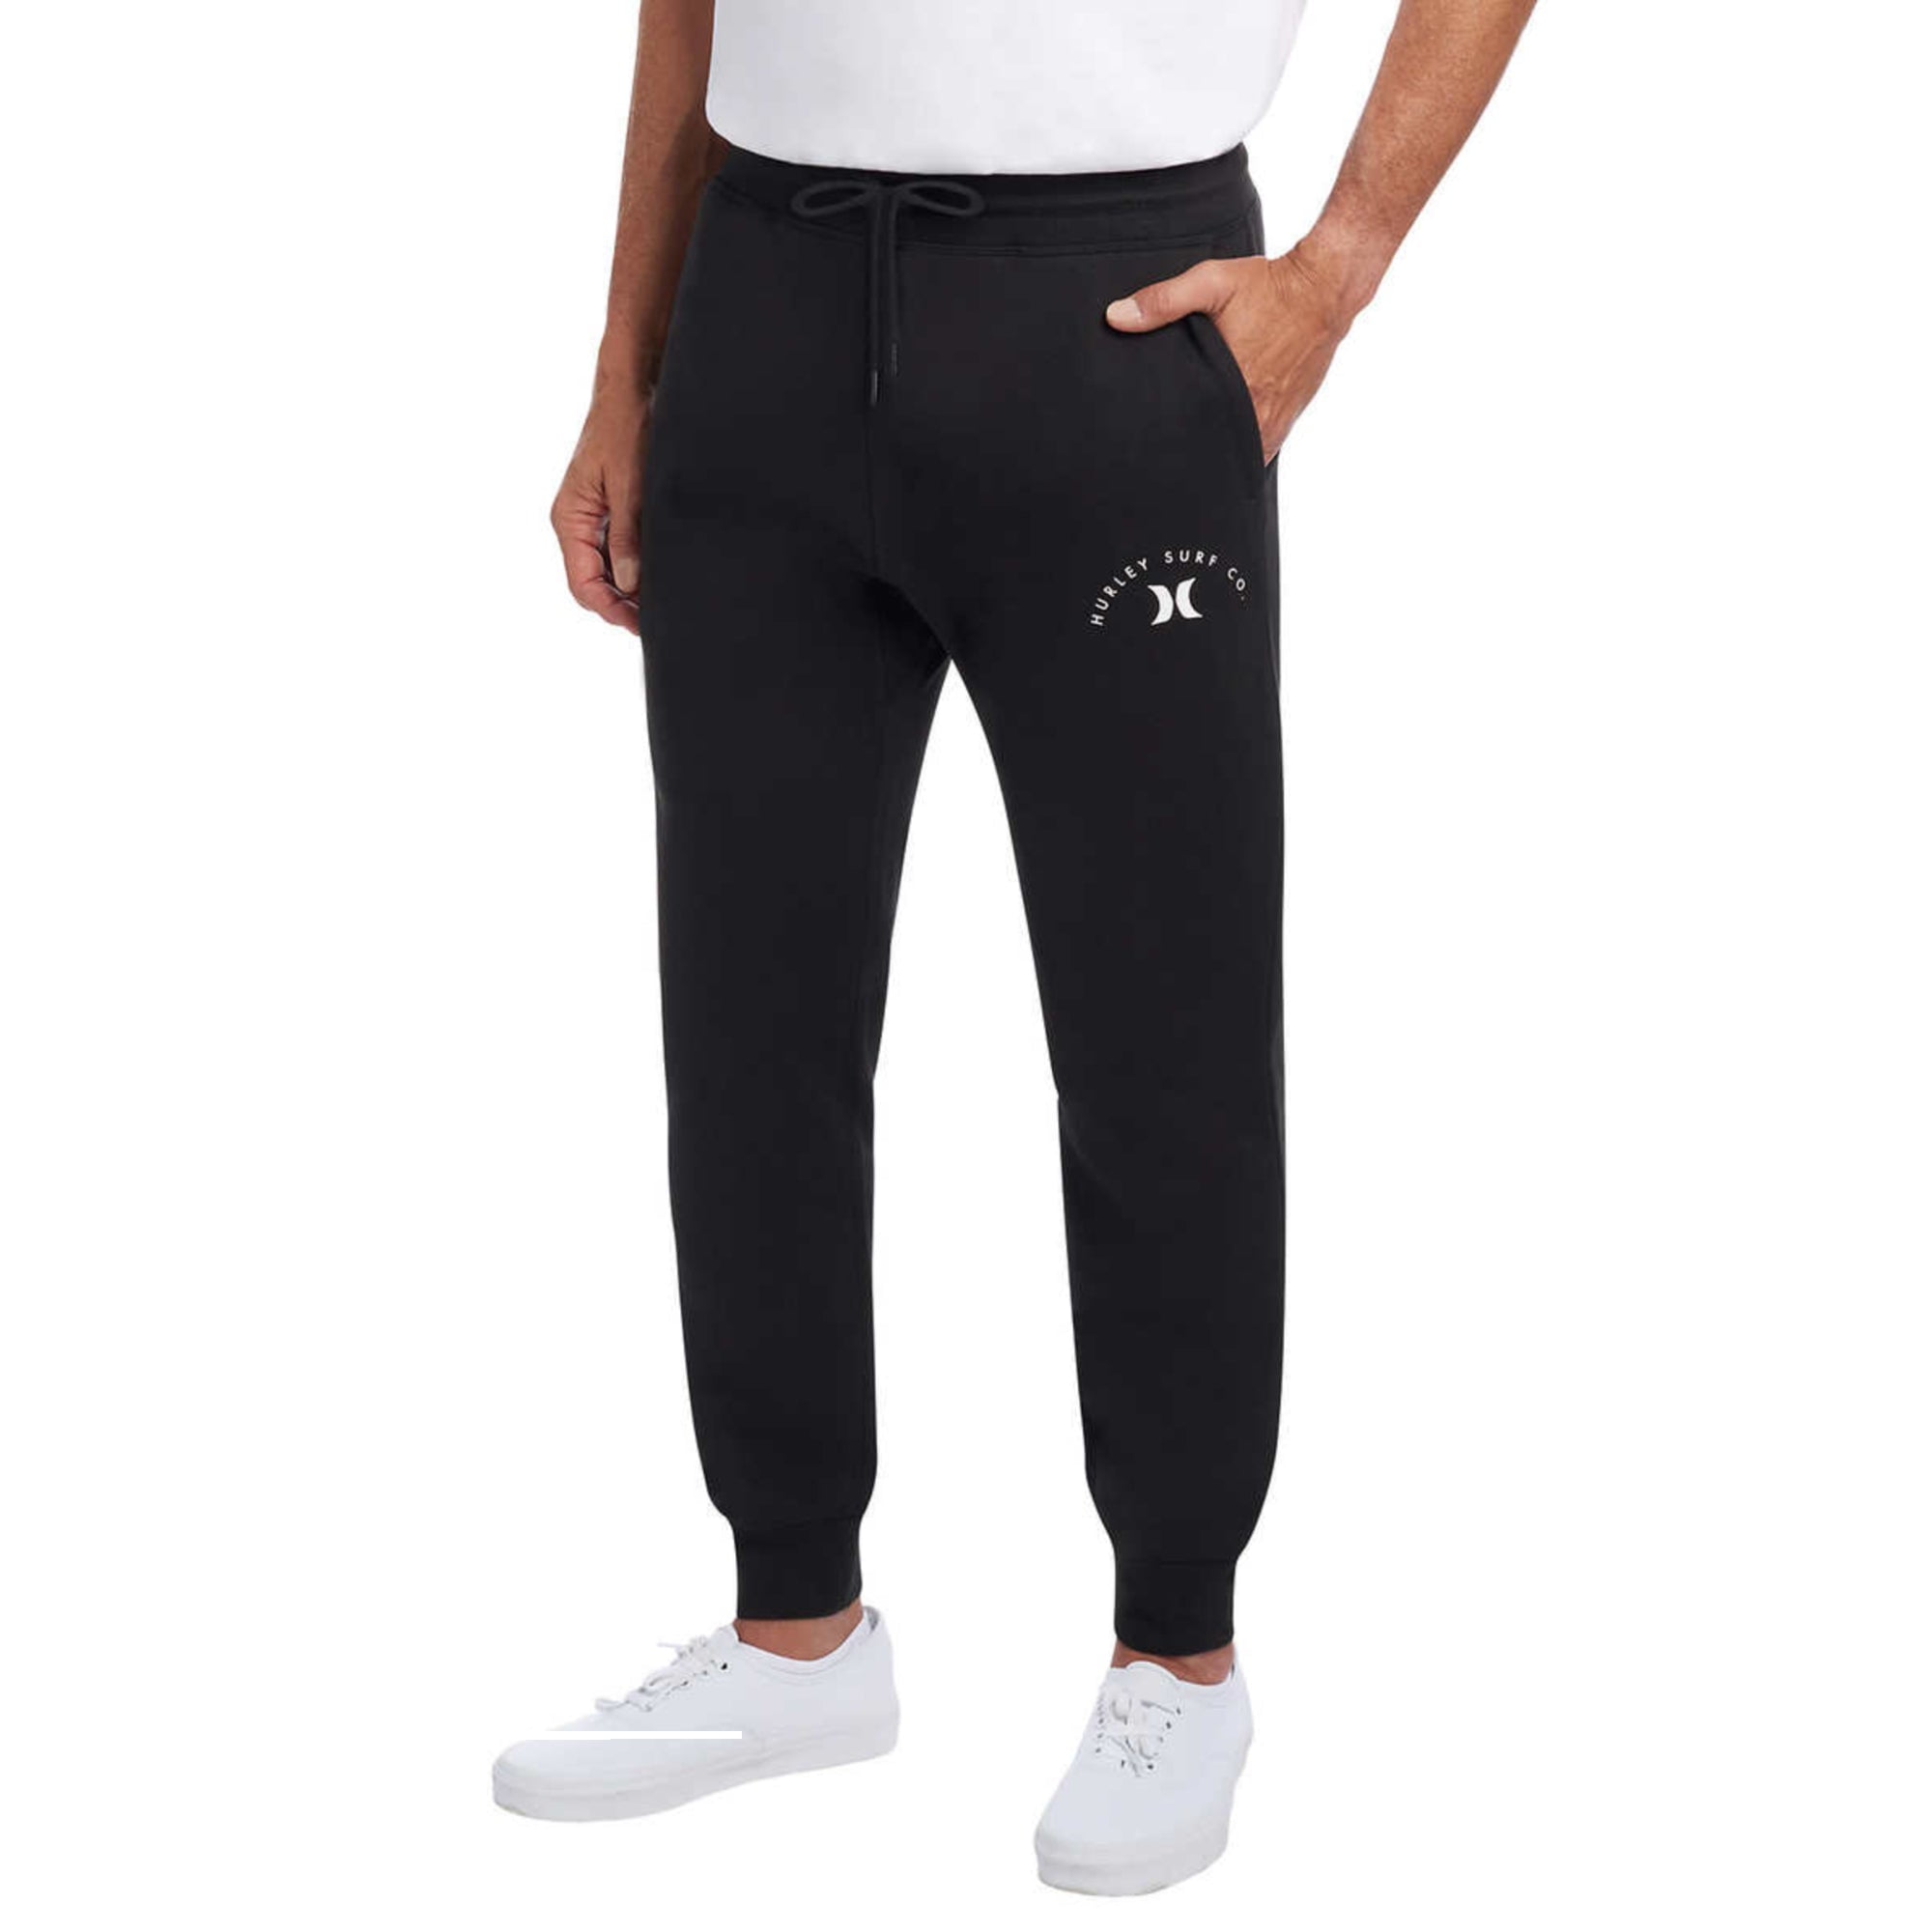 Hurley Men's Ultra Soft Cotton Blend Fleece Casual Active Pants Joggers- Black XXL